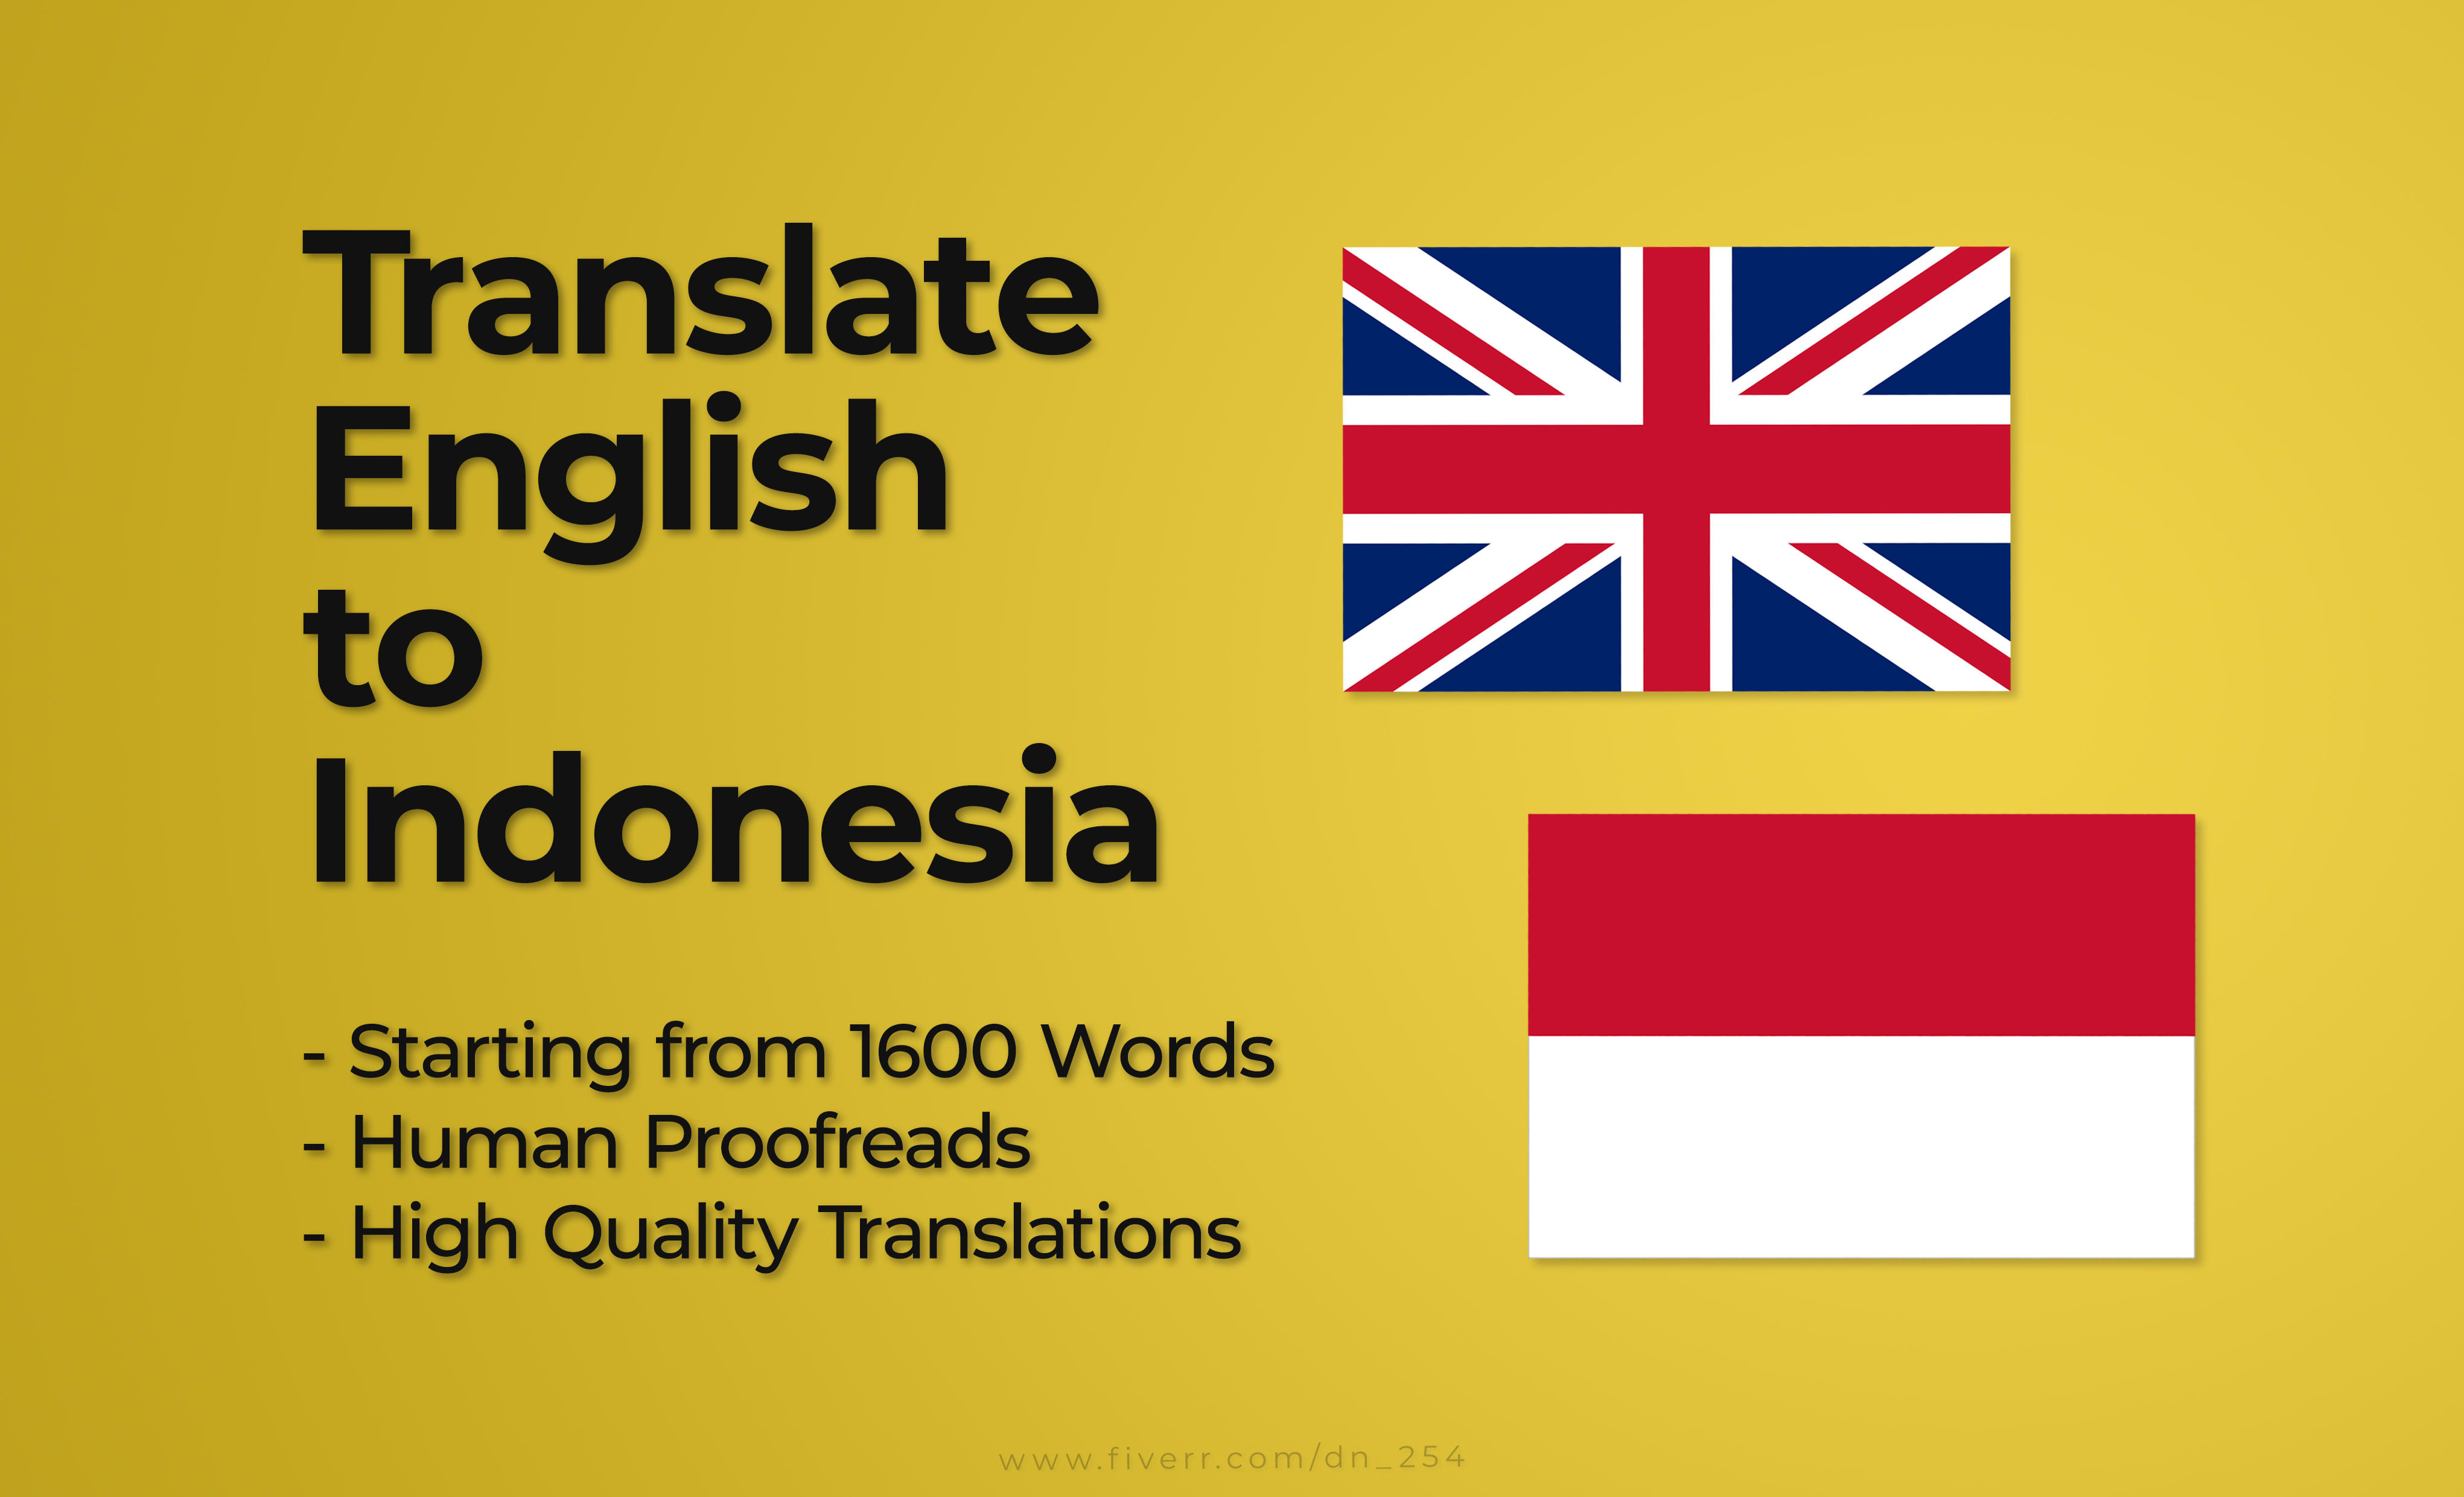 translate journey to bahasa indonesia